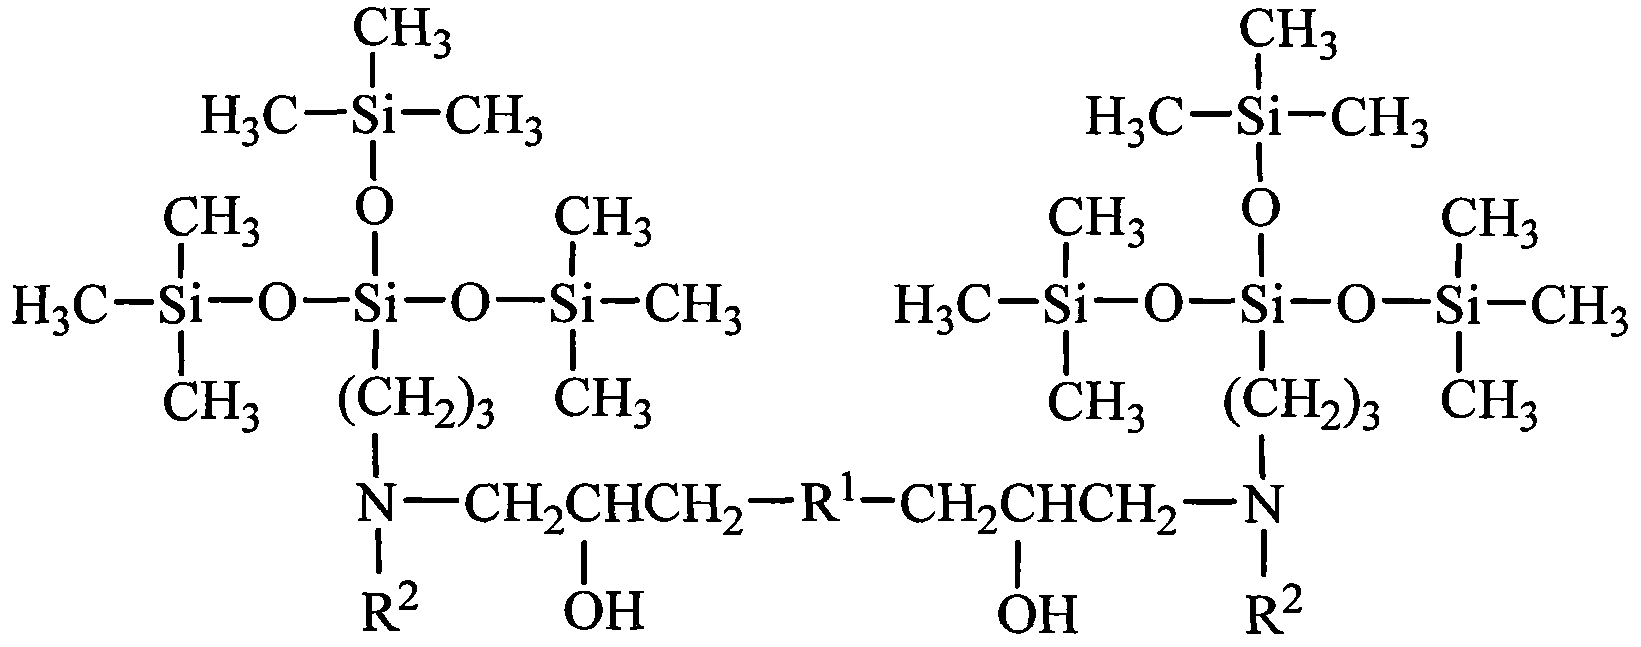 Tetrasiloxane dimeric surfactant containing sugar acylamino and preparation method